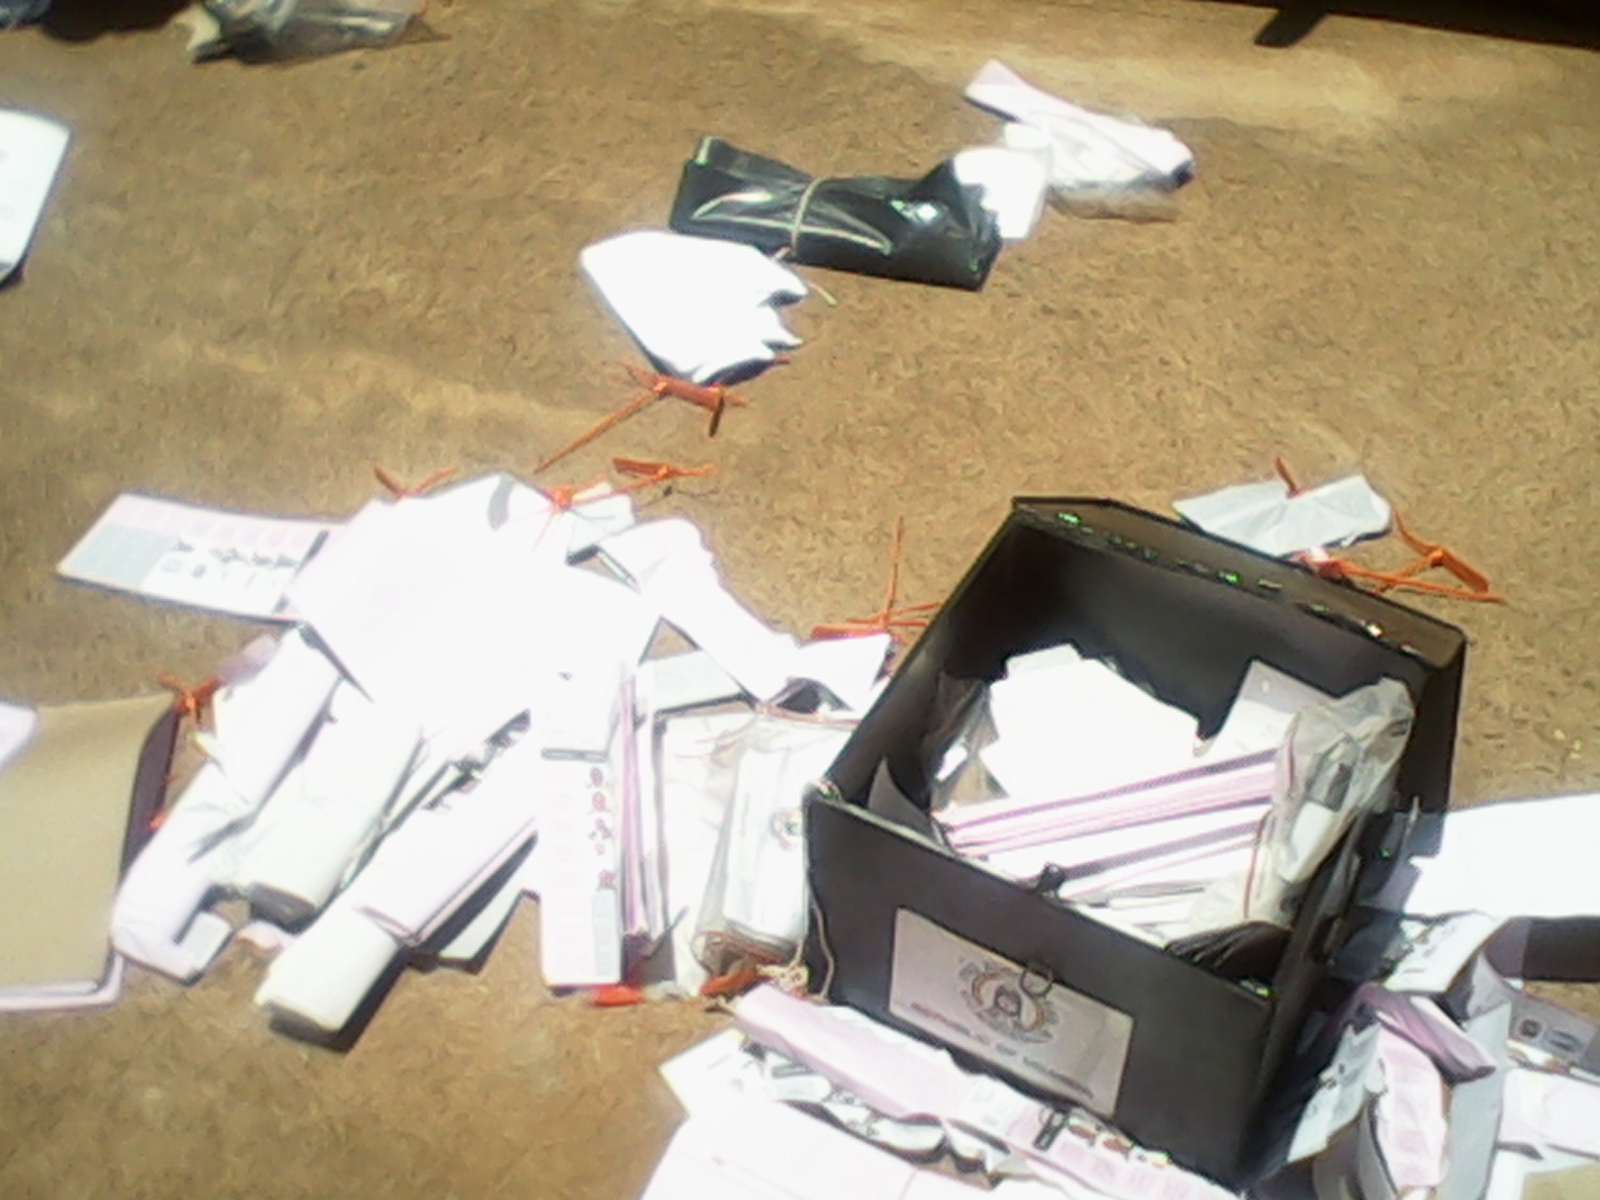 Destroyed ballot boxes